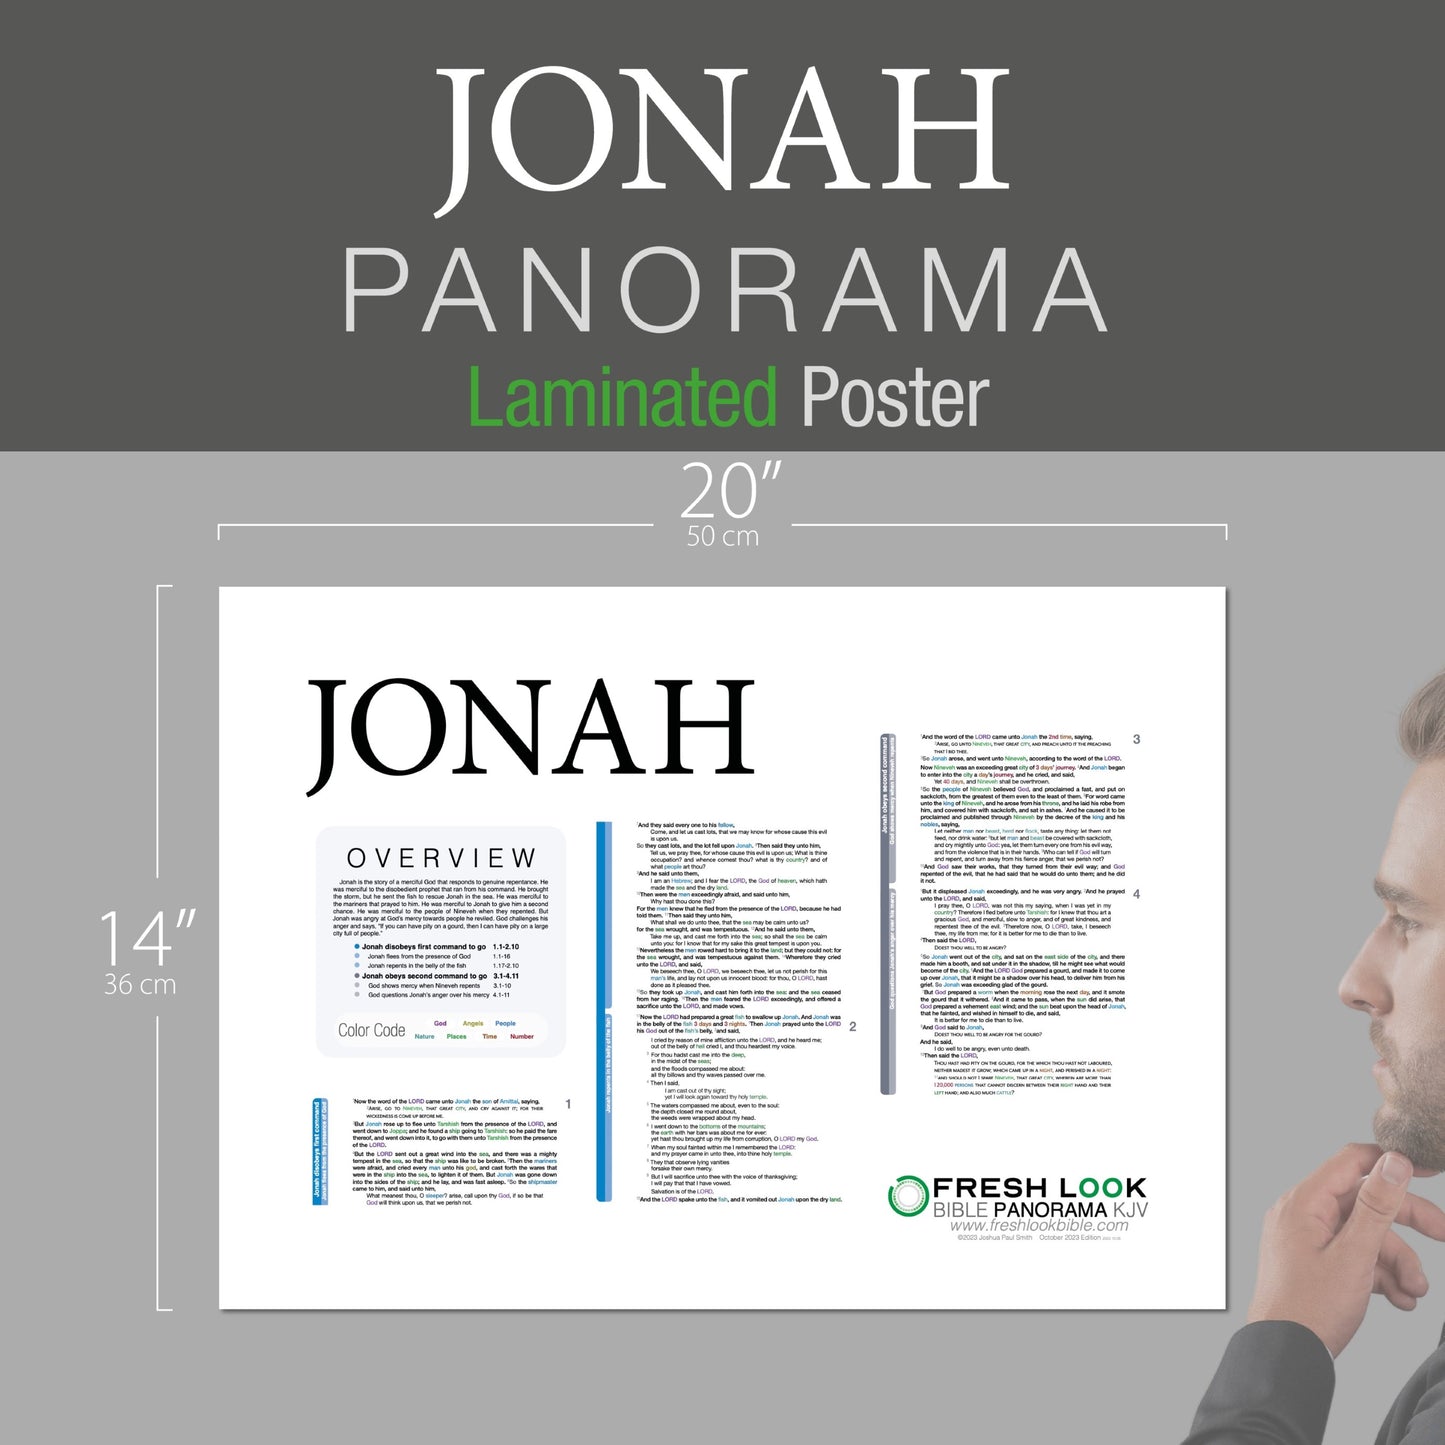 Jonah Panorama Laminated